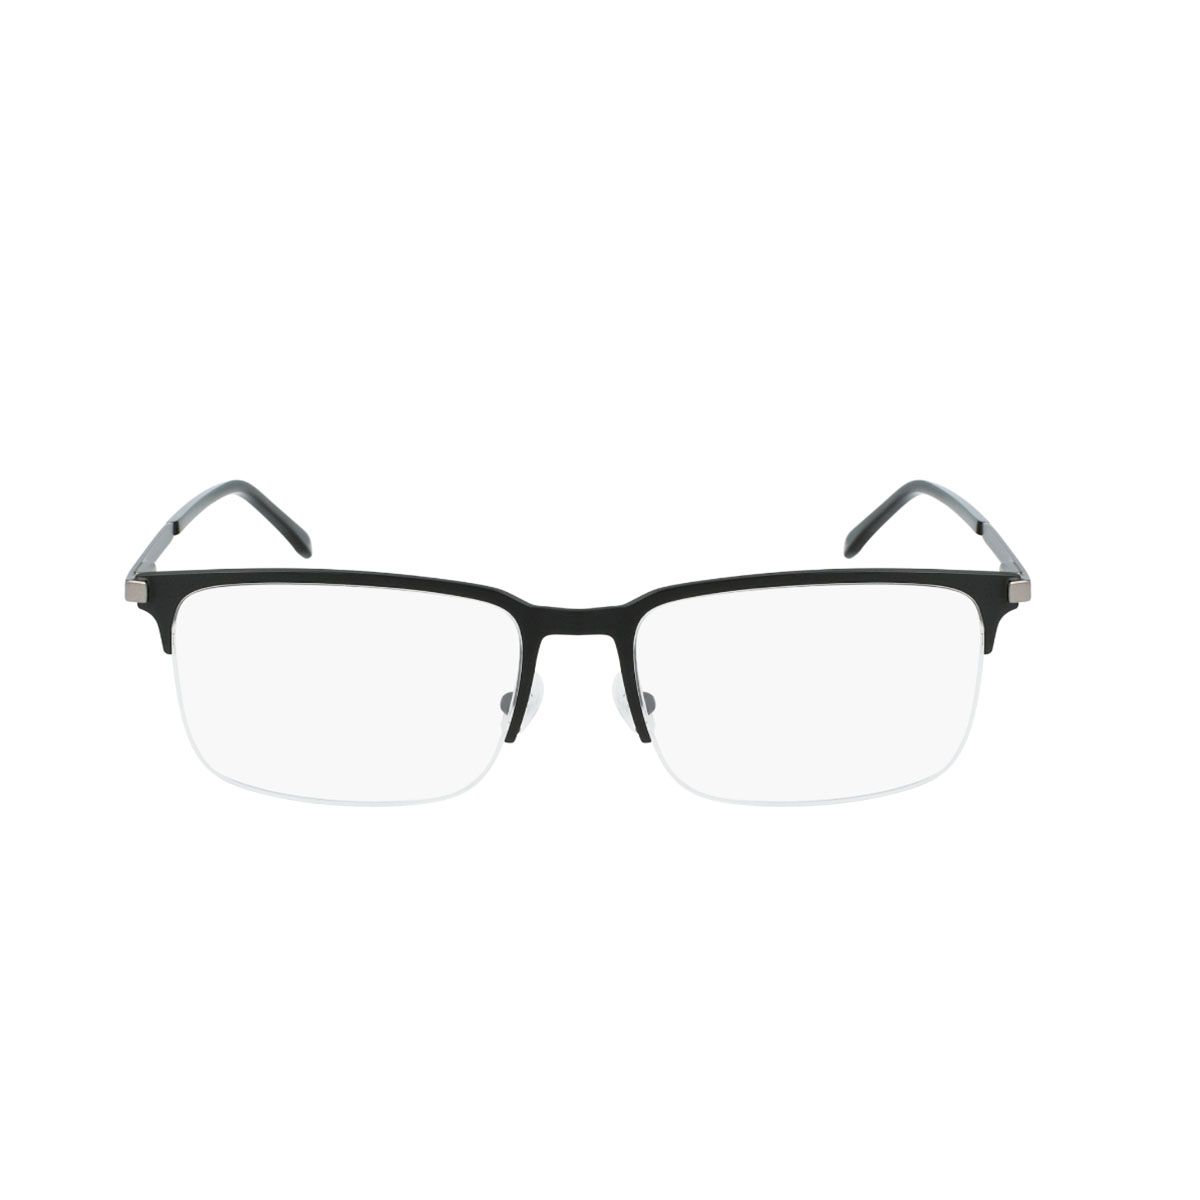 L2268 Rectangle Eyeglasses 1 - size  54